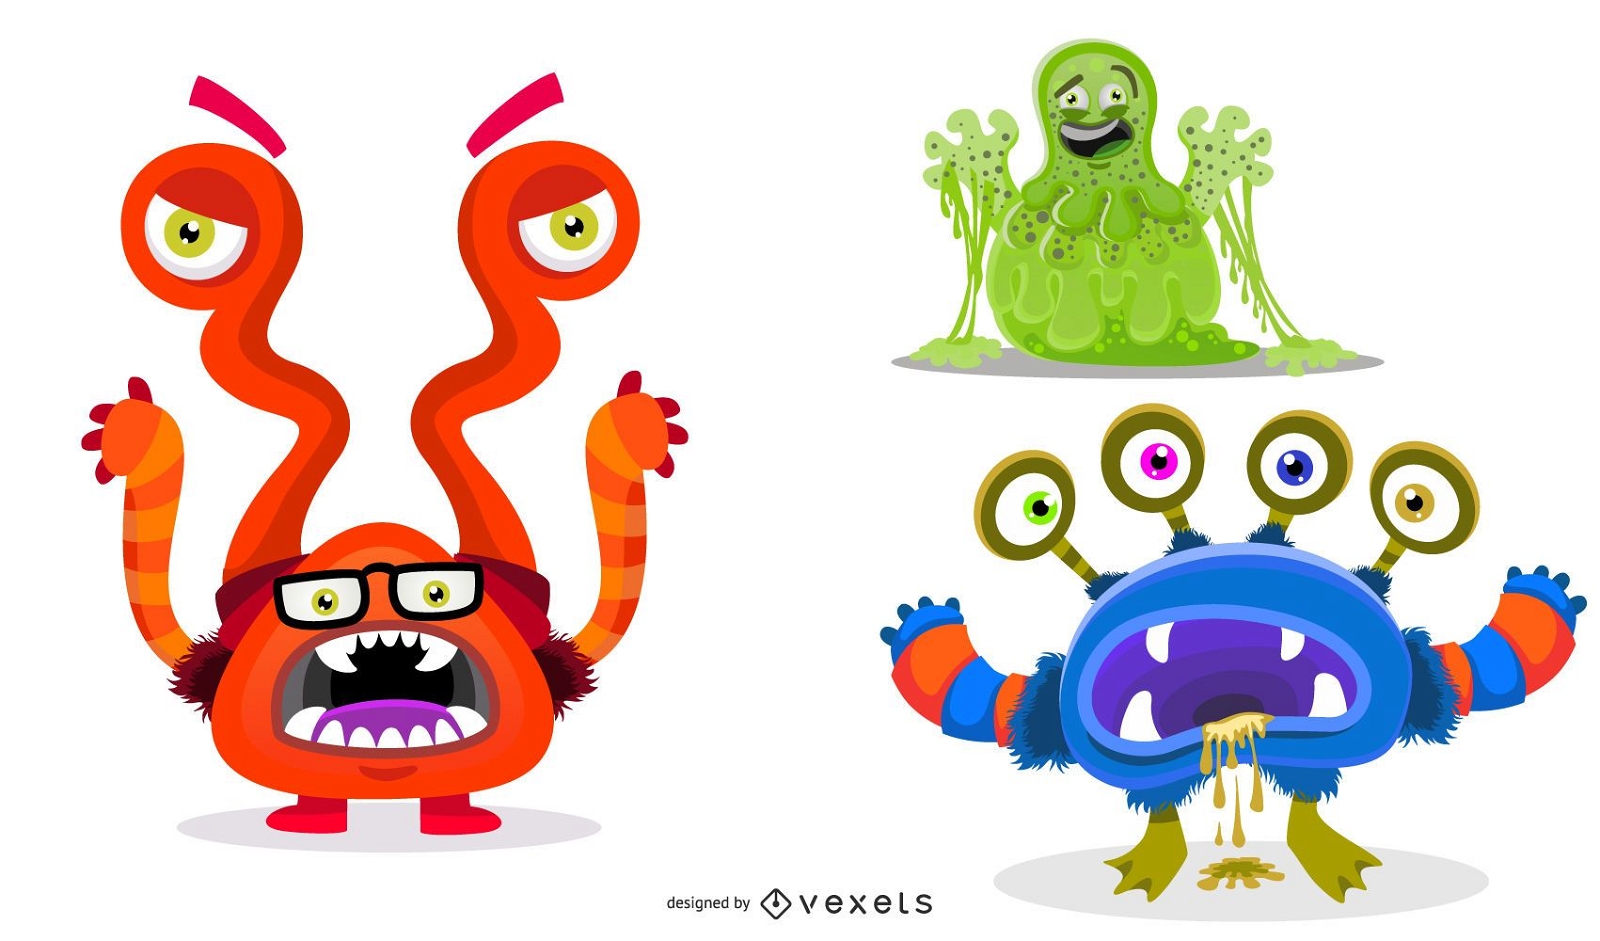 Bonitos desenhos de monstros ilustrados